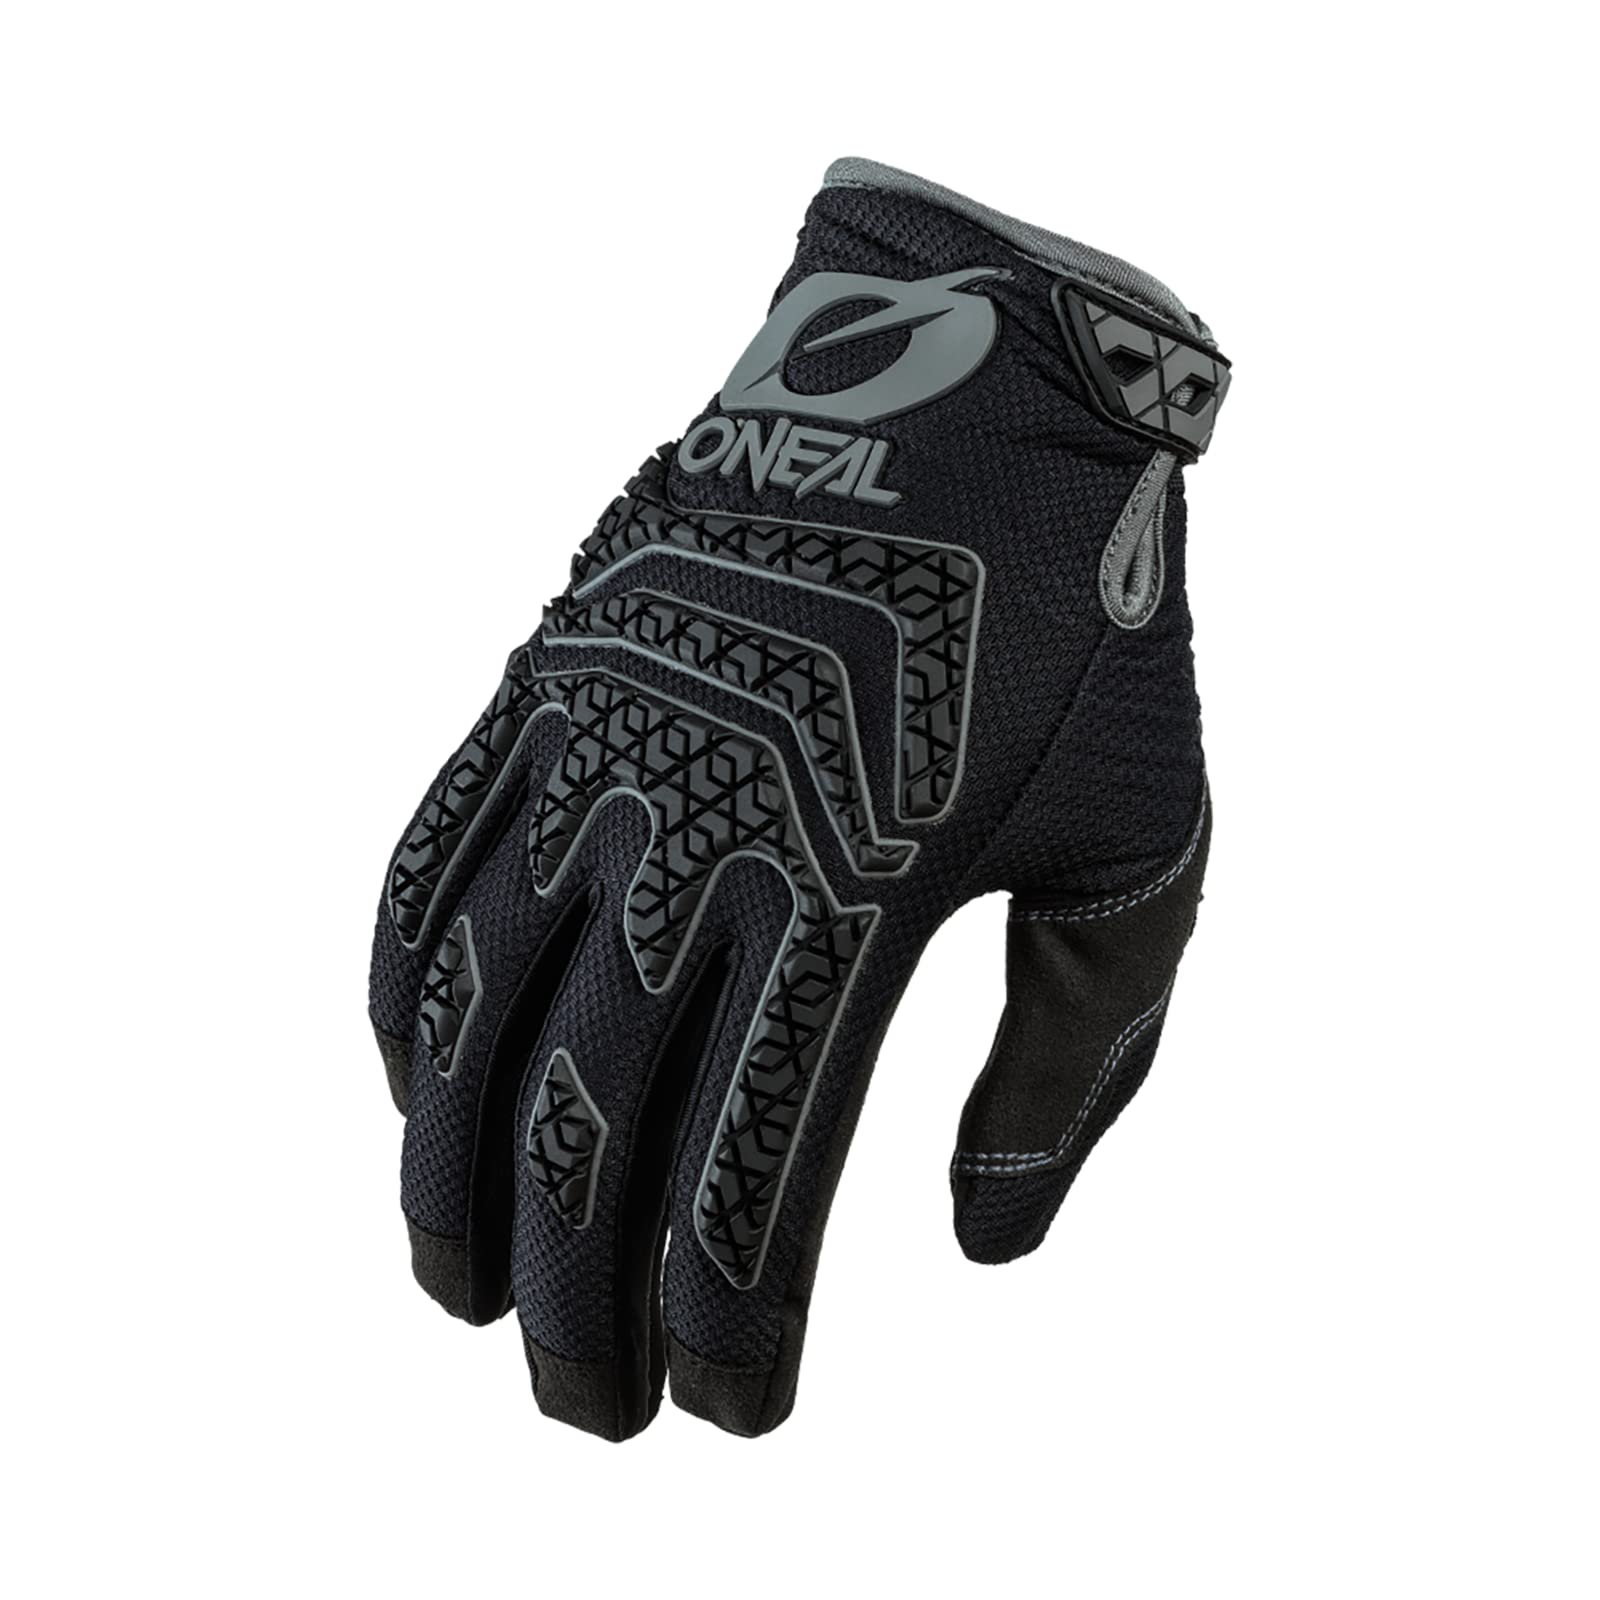 O'NEAL | Fahrrad- & Motocross-Handschuhe | MX MTB DH FR Downhill Freeride | Langlebige, Flexible Materialien, Silikonprint für Grip | Sniper Elite Glove | Erwachsene | Schwarz Grau | Größe M von O'NEAL